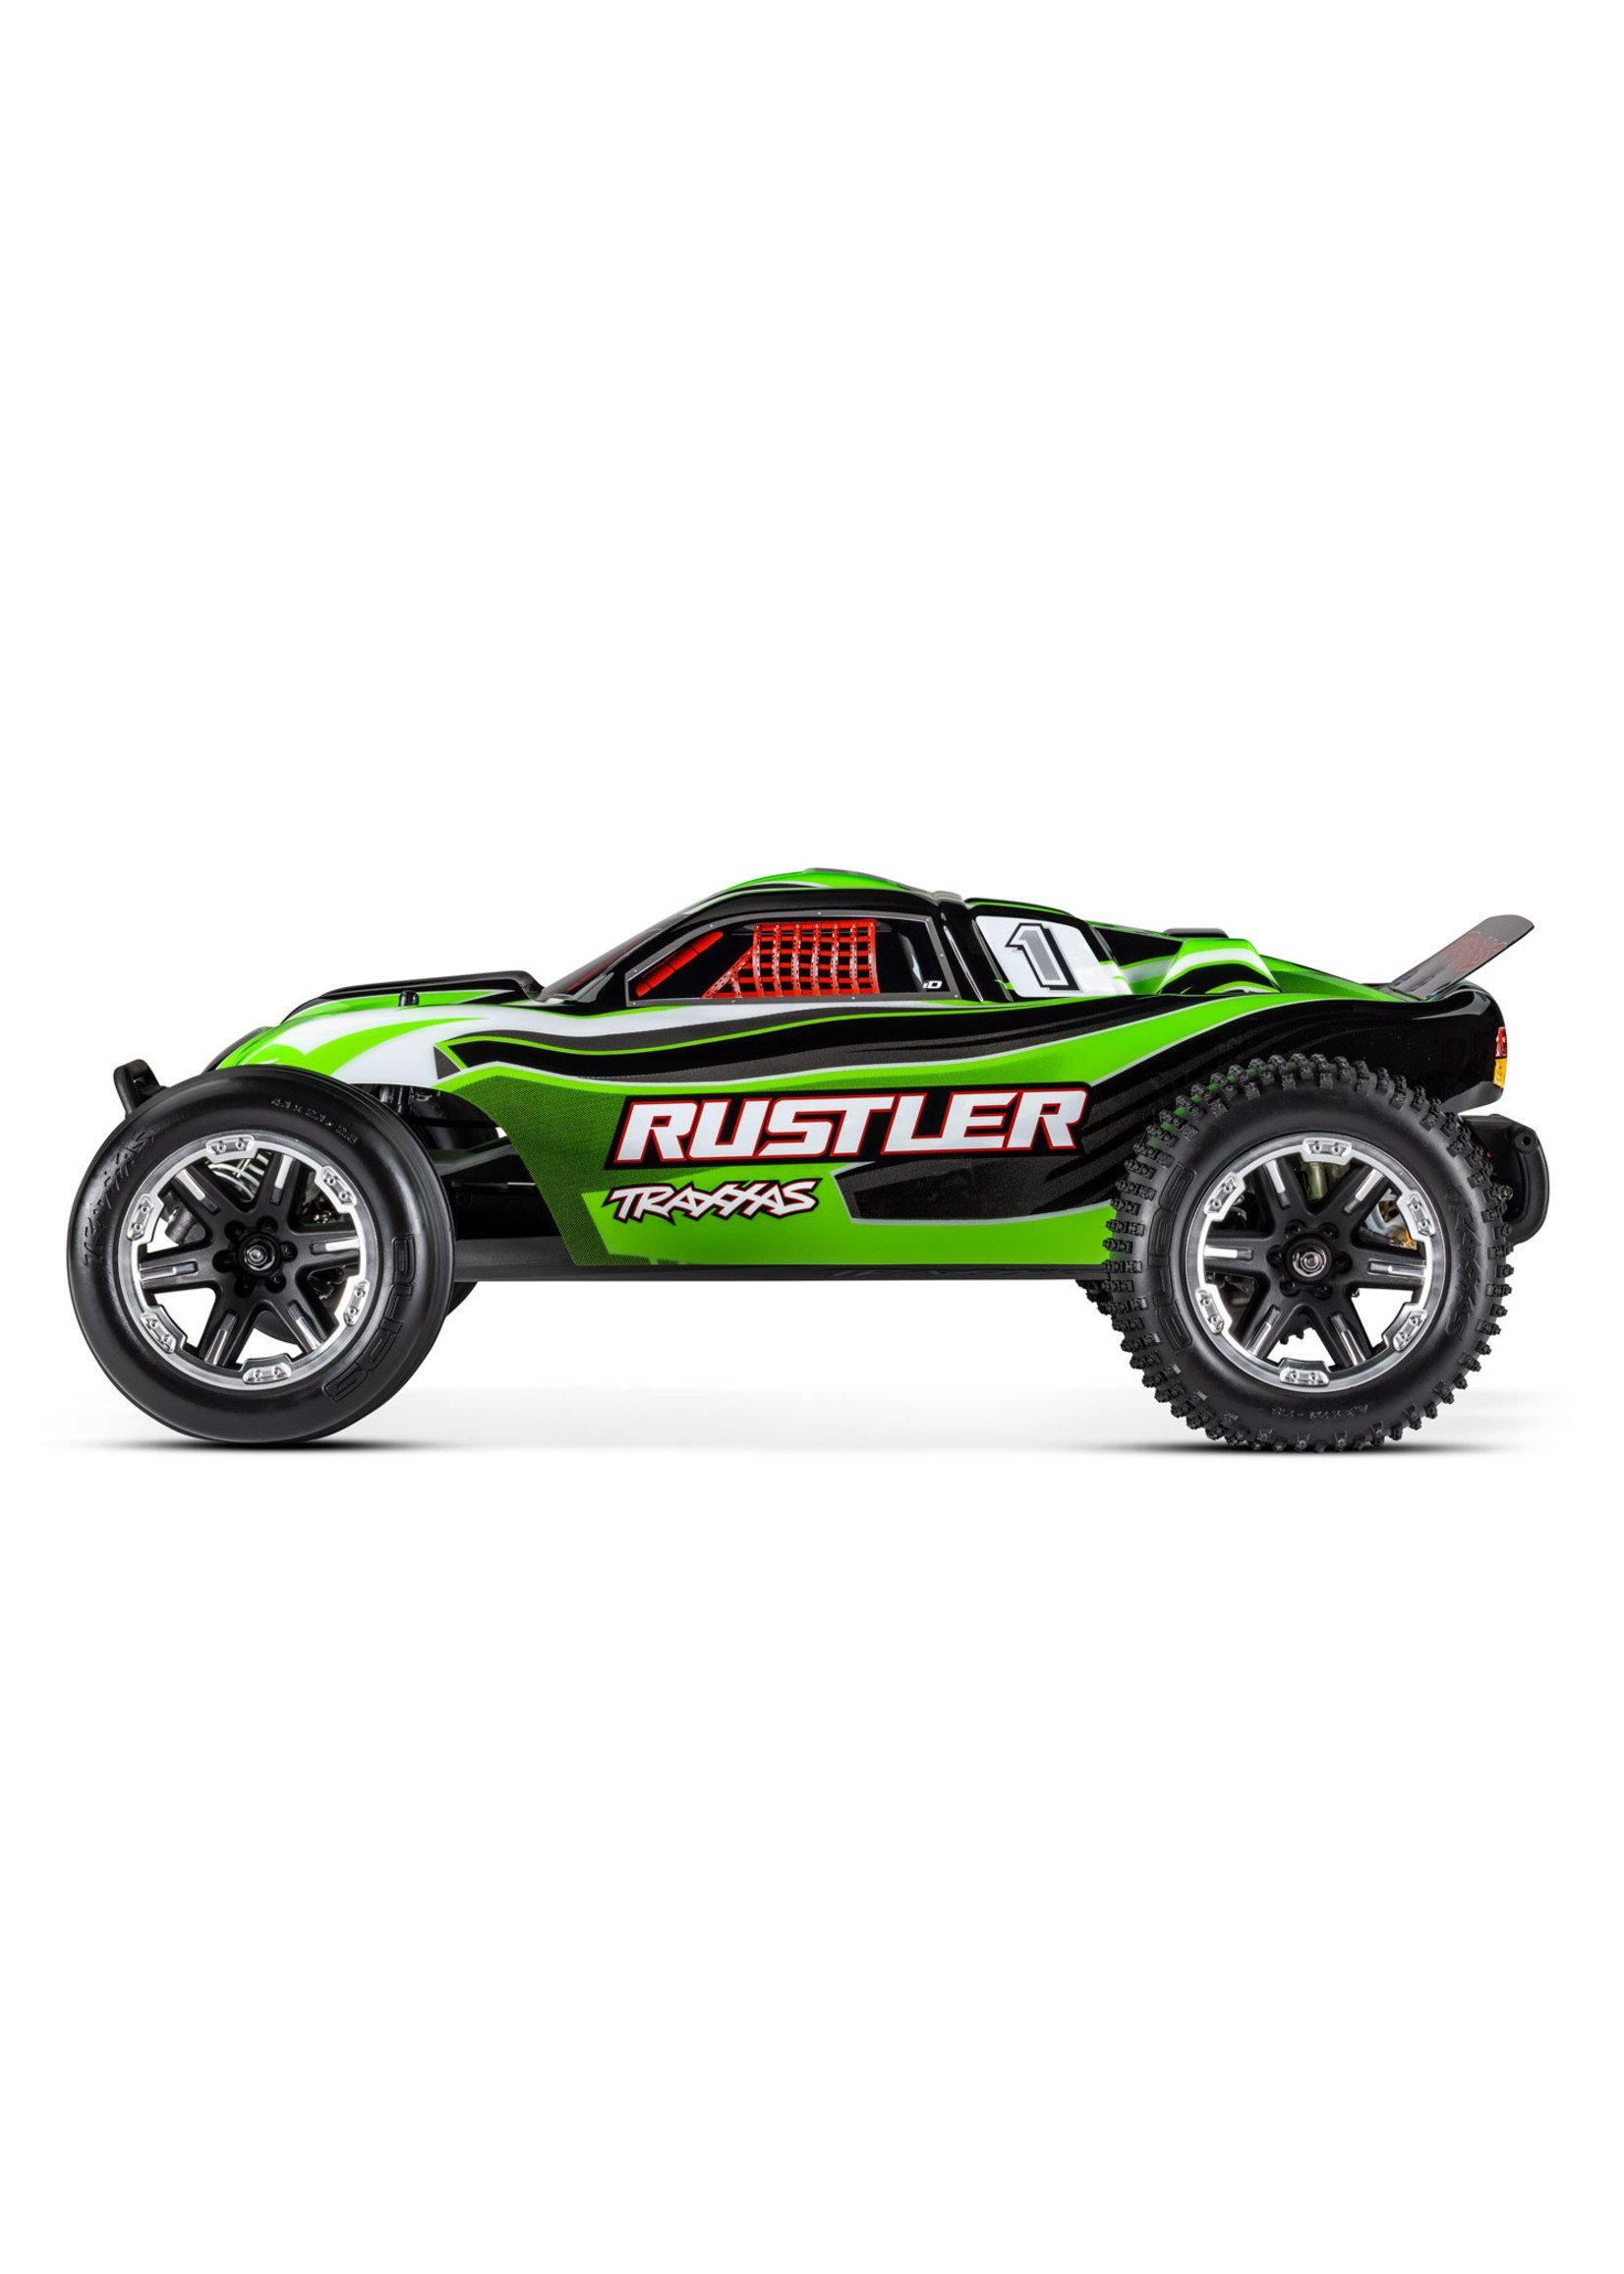 Traxxas 1/10 Rustler 2WD RTR Stadium Truck with Lights - Green